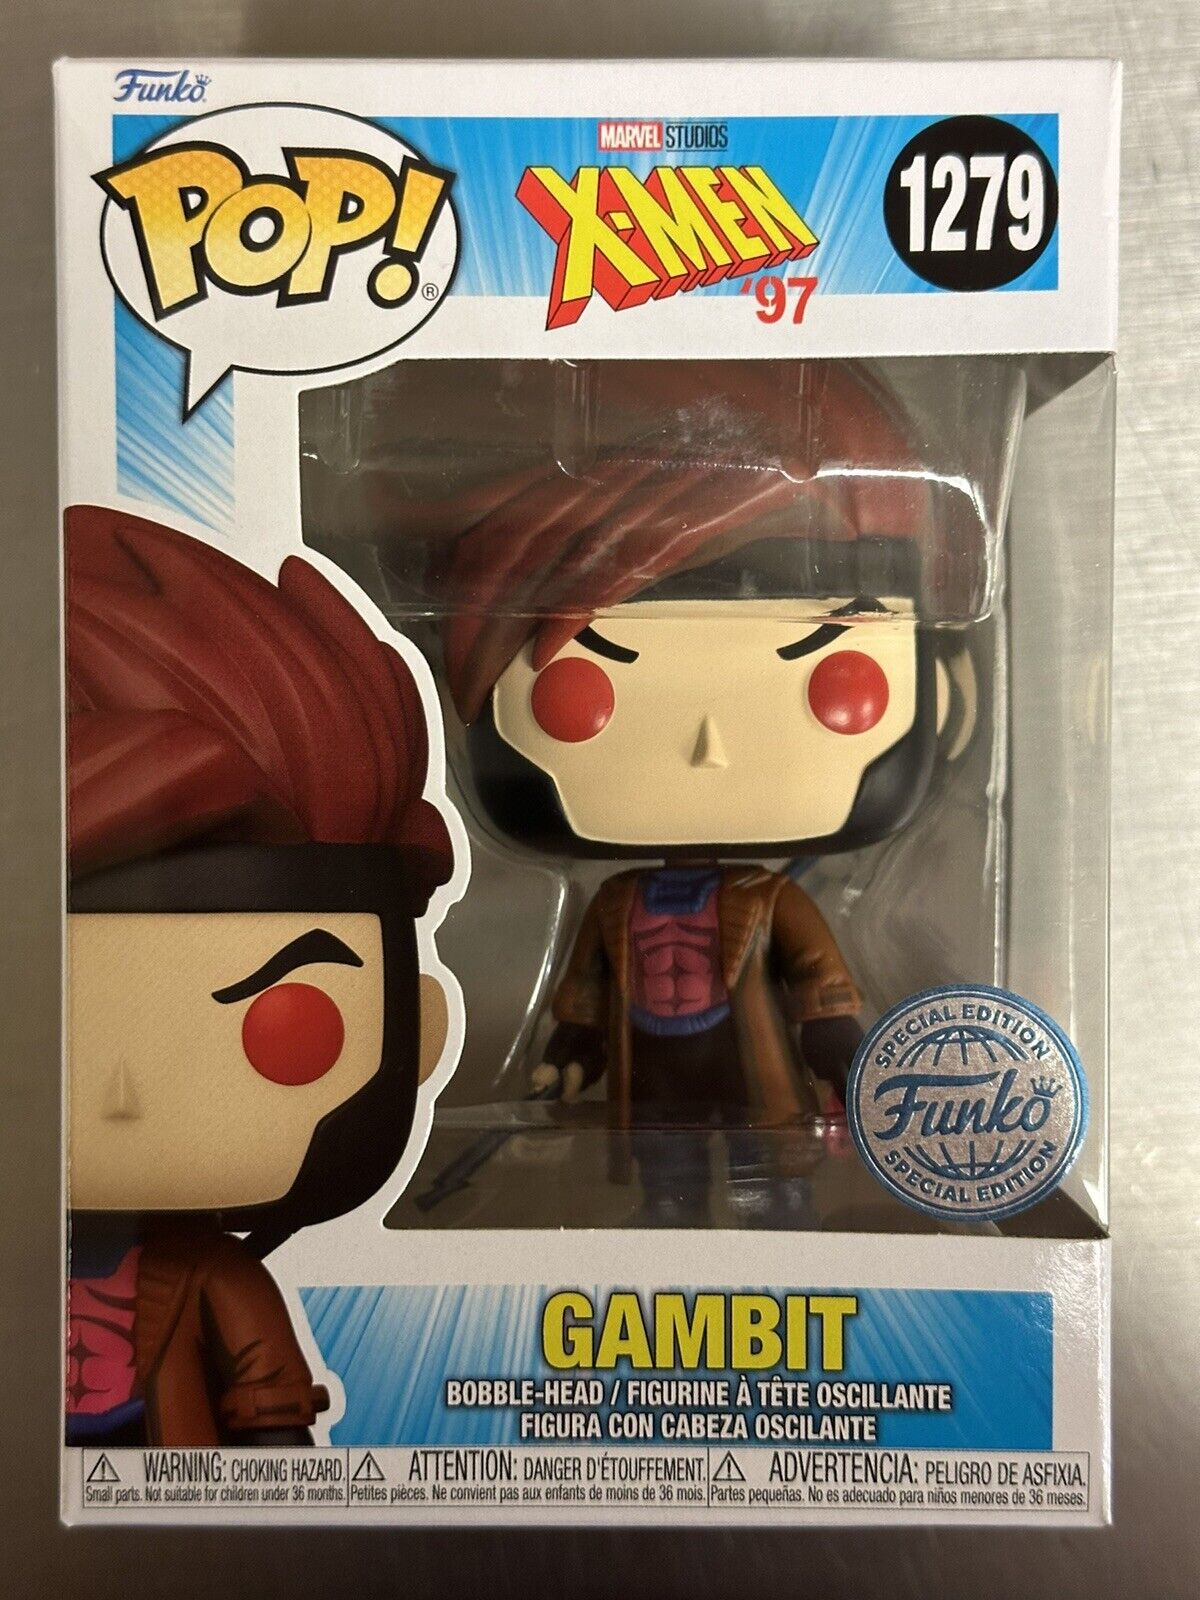 Gambit Funko Pop X-Men 97 1279 Funko Shop Exclusive Marvel Animated Series